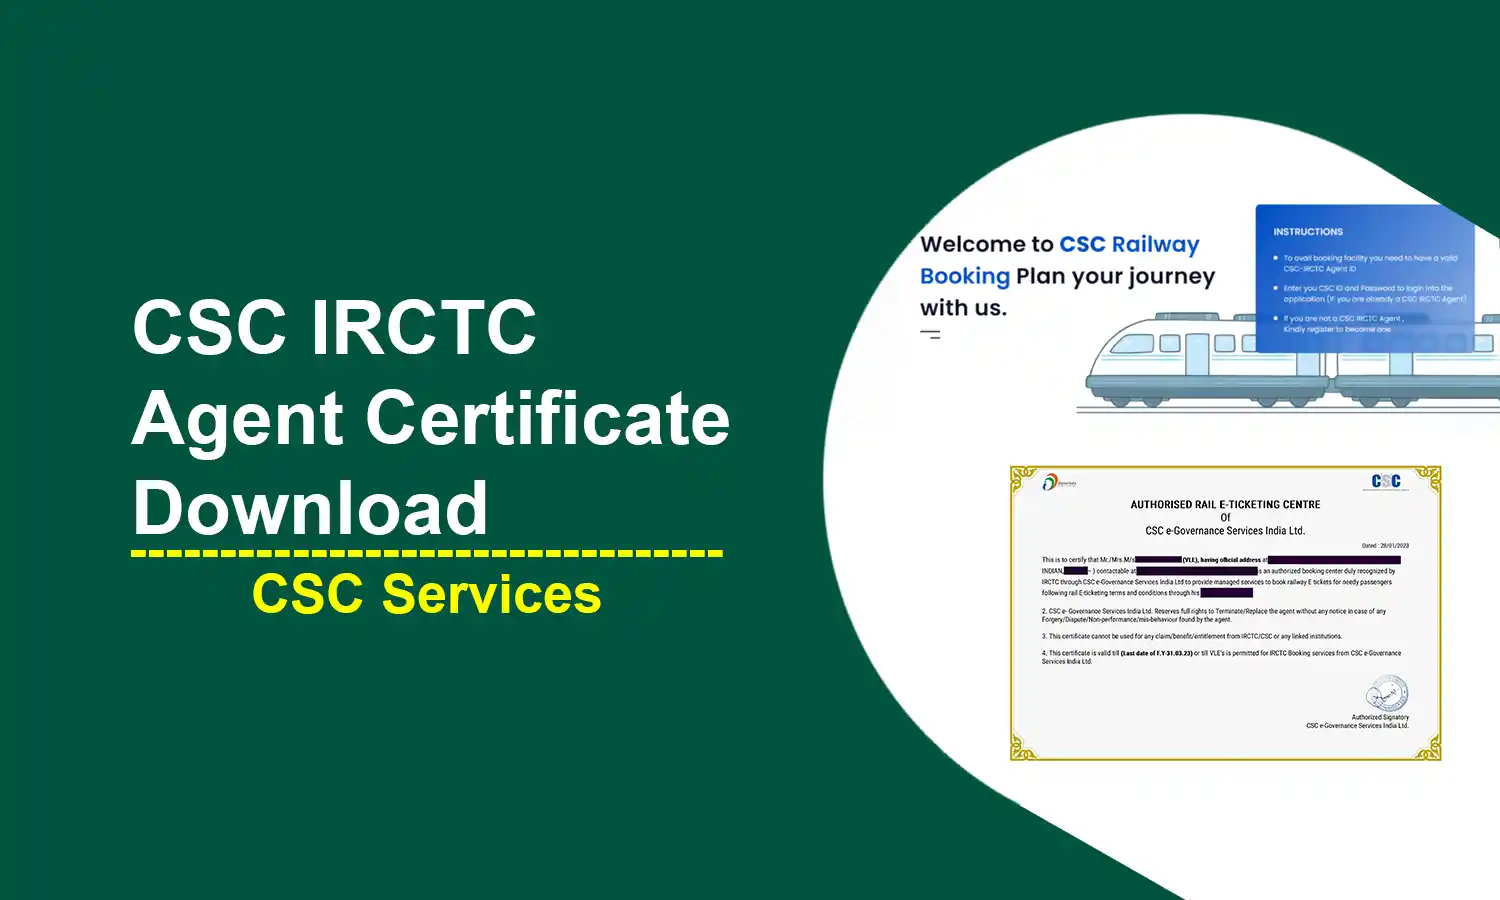 CSC IRCTC Agent Certificate Download